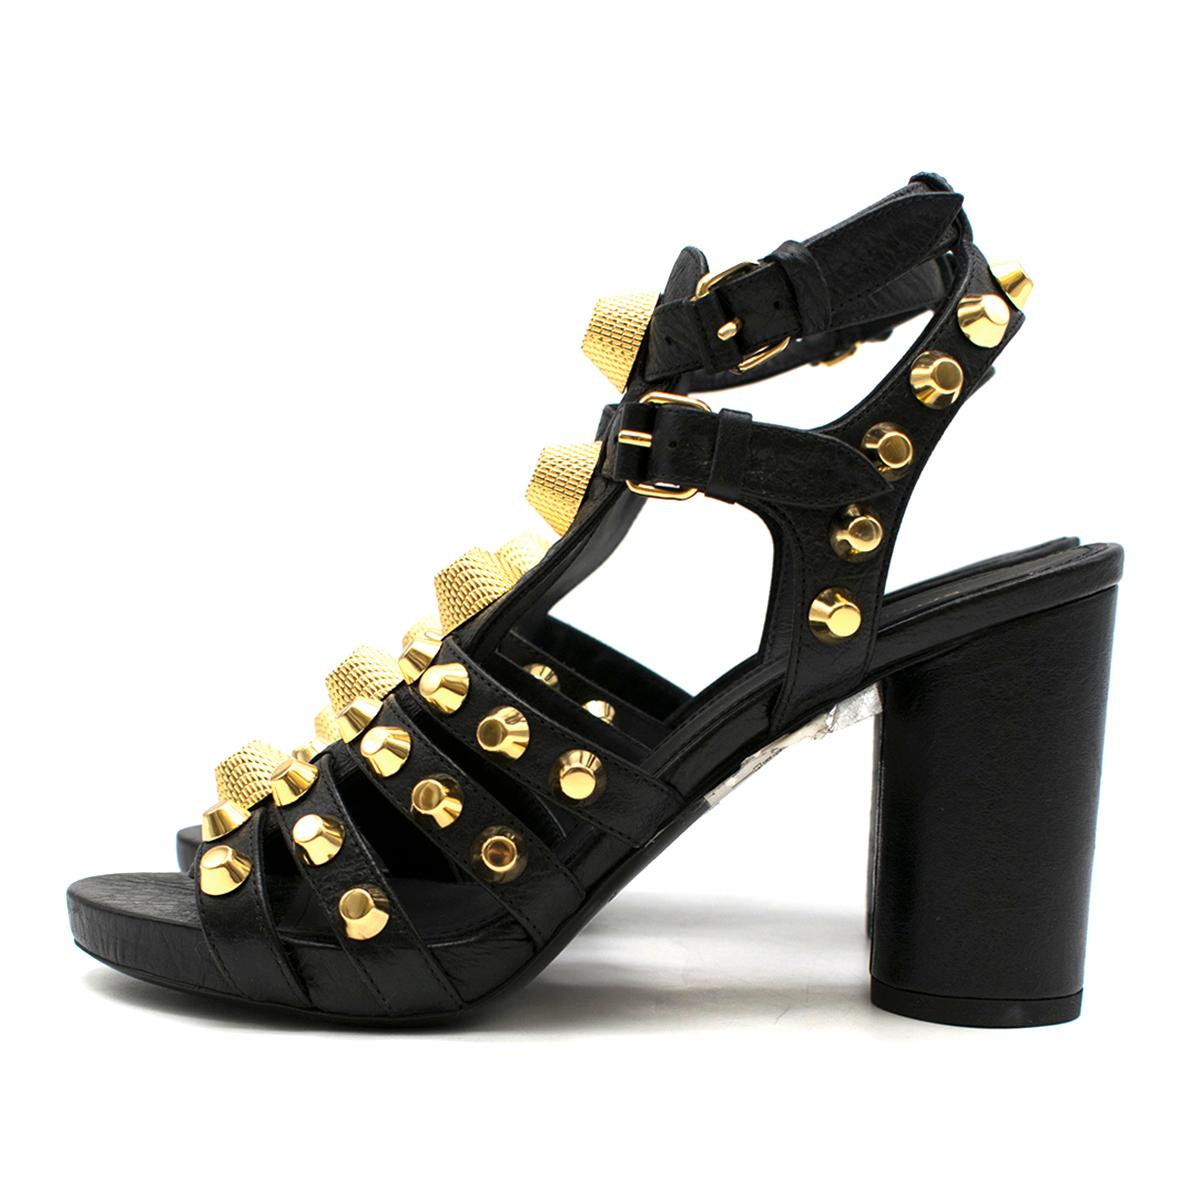 Balenciaga Black Leather Studded Heeled Sandals 36 1